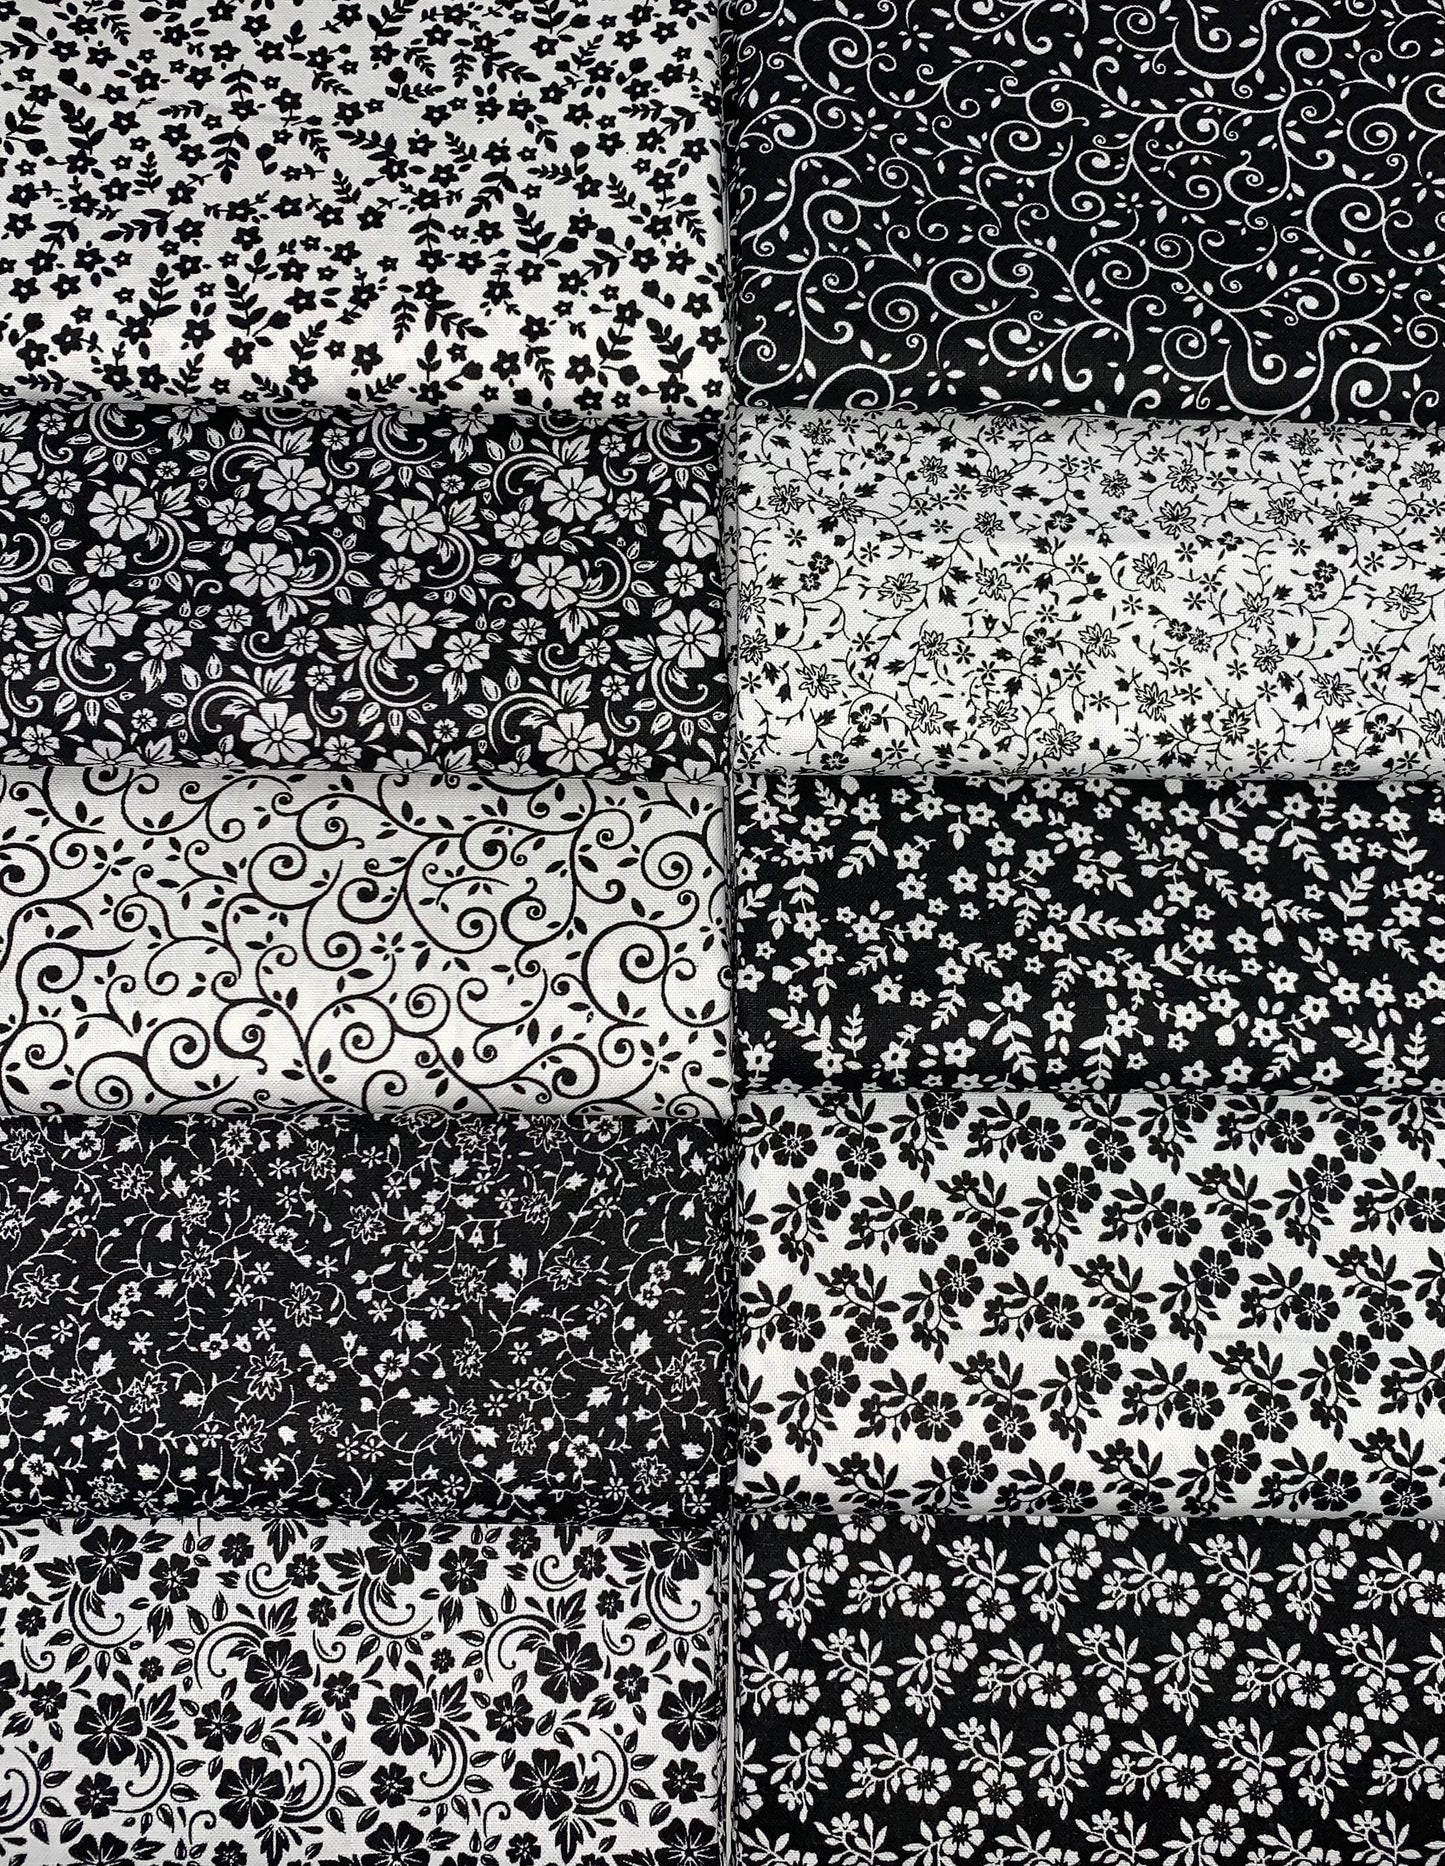 Night & Day (Black & White Prints) Half-yard Bundle - 10 Fabrics, 5 Total Yards